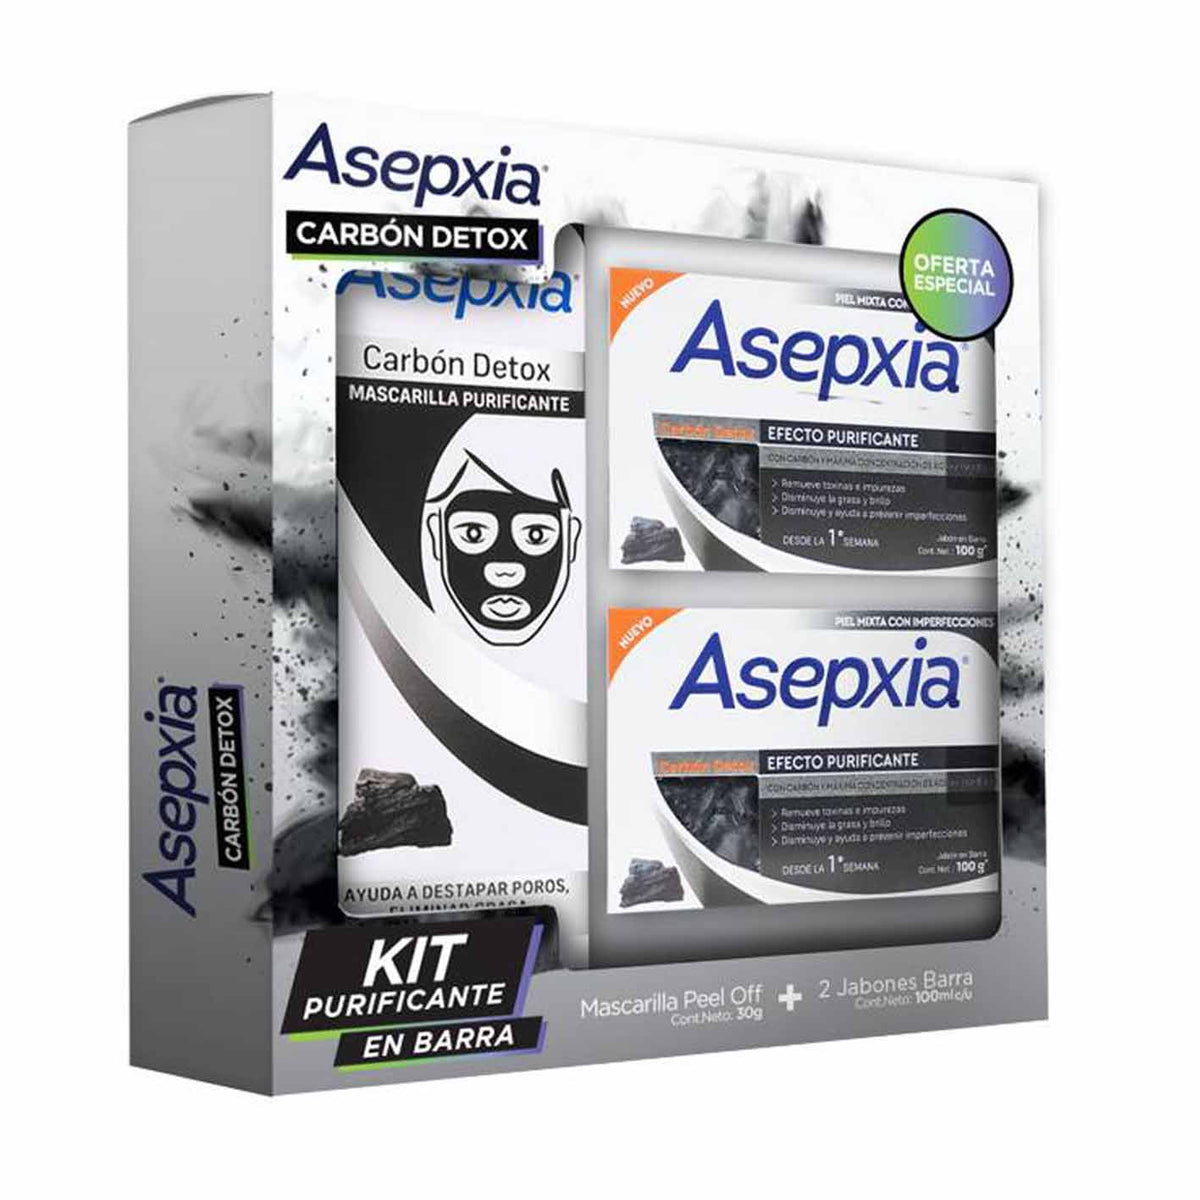 Asepxia Pack Mascarilla Purificante + Jabones Detox Carbón